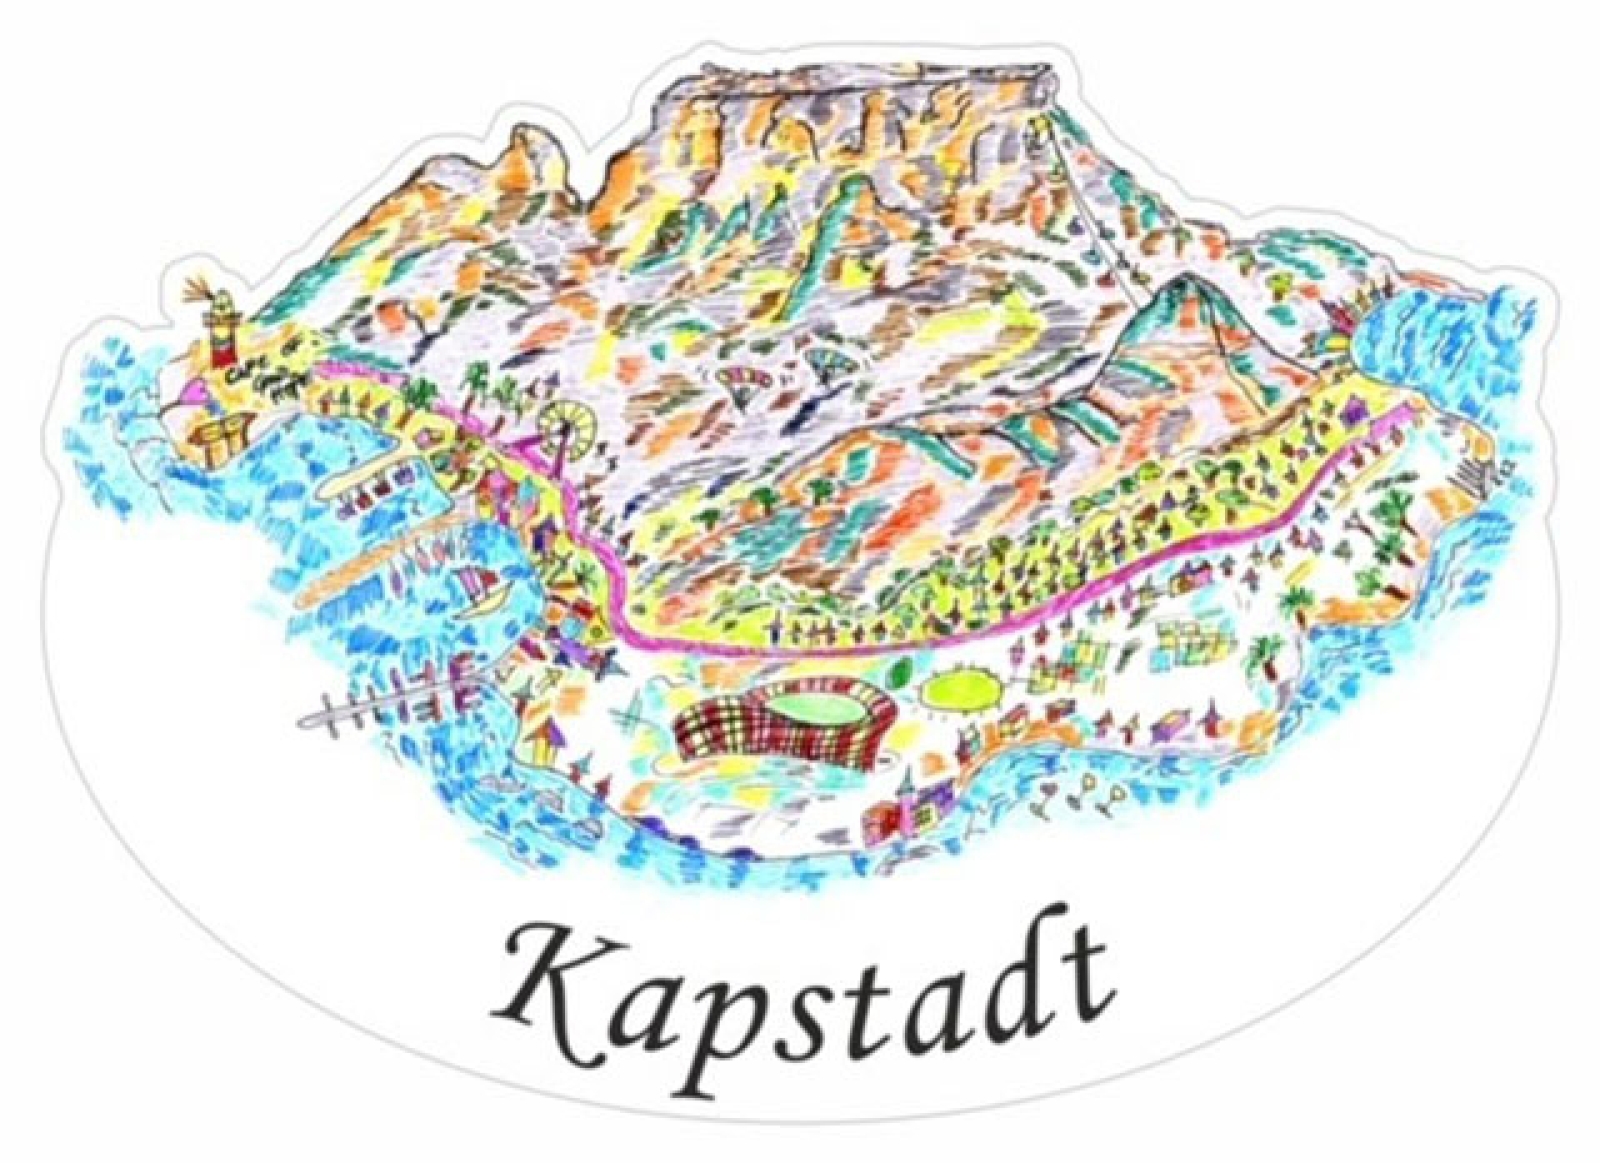 kapstadt-city-magnet-ullimcart